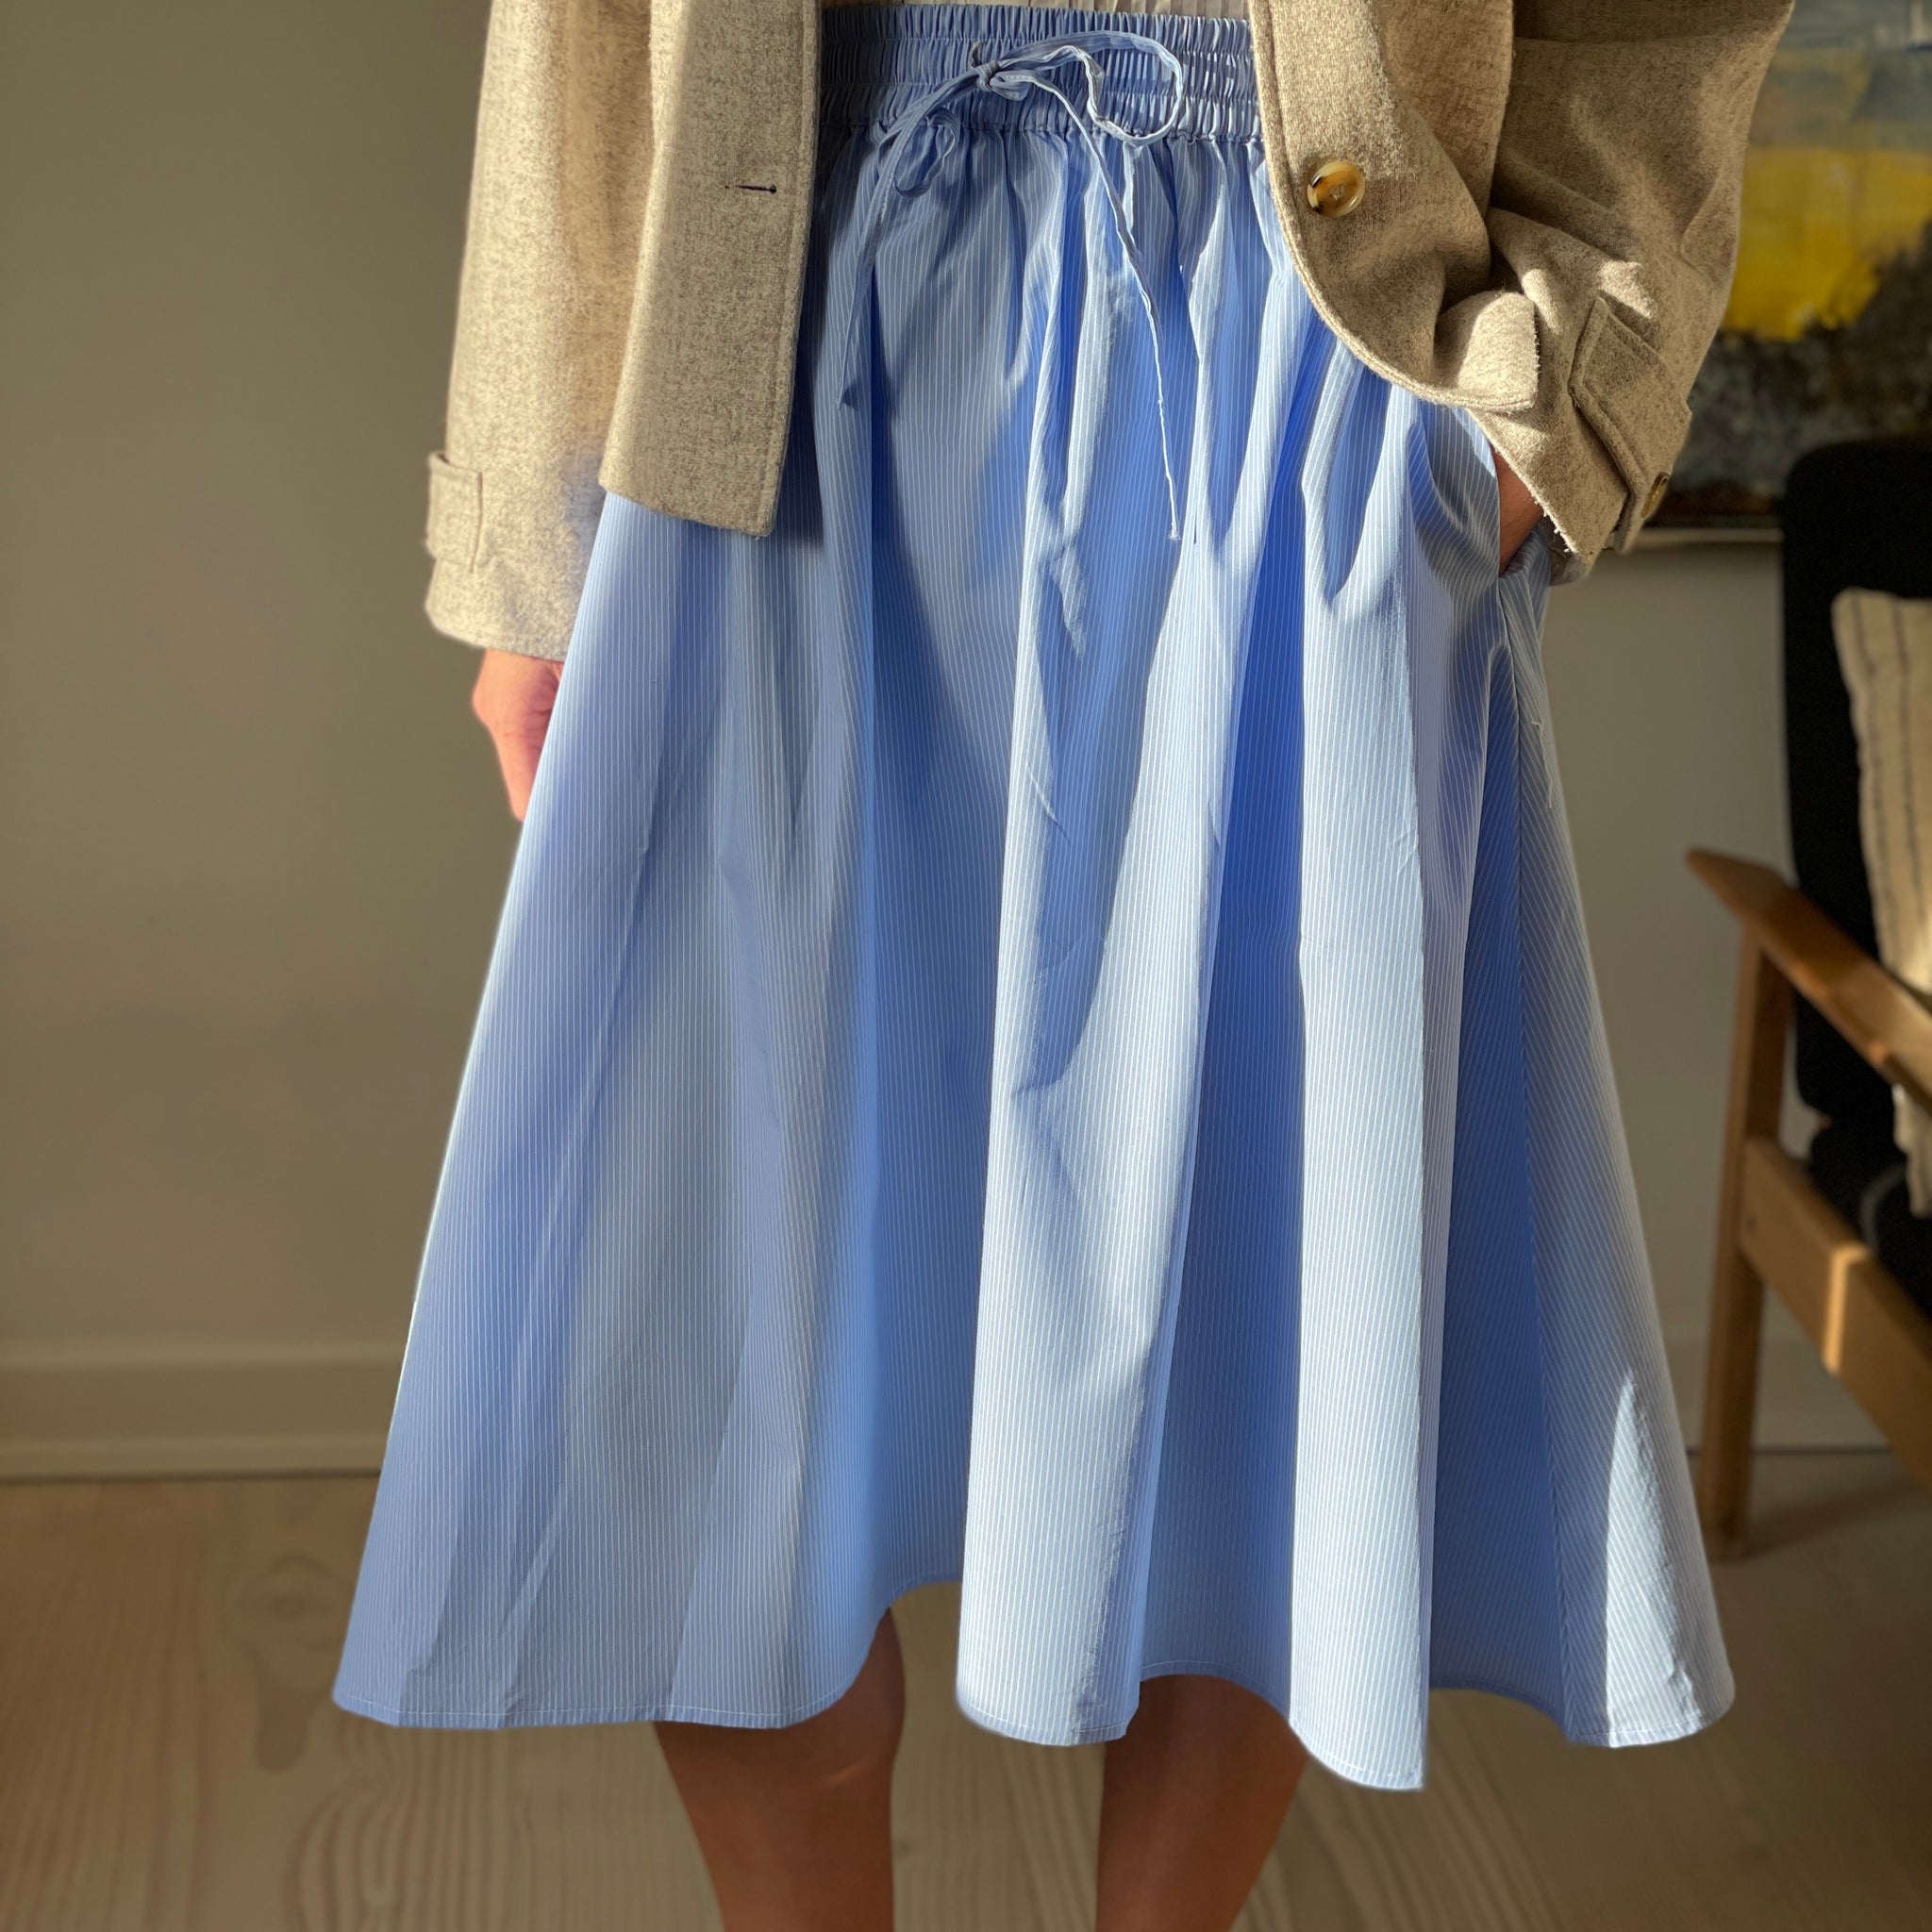 Anika nederdel - Blå/hvid striber